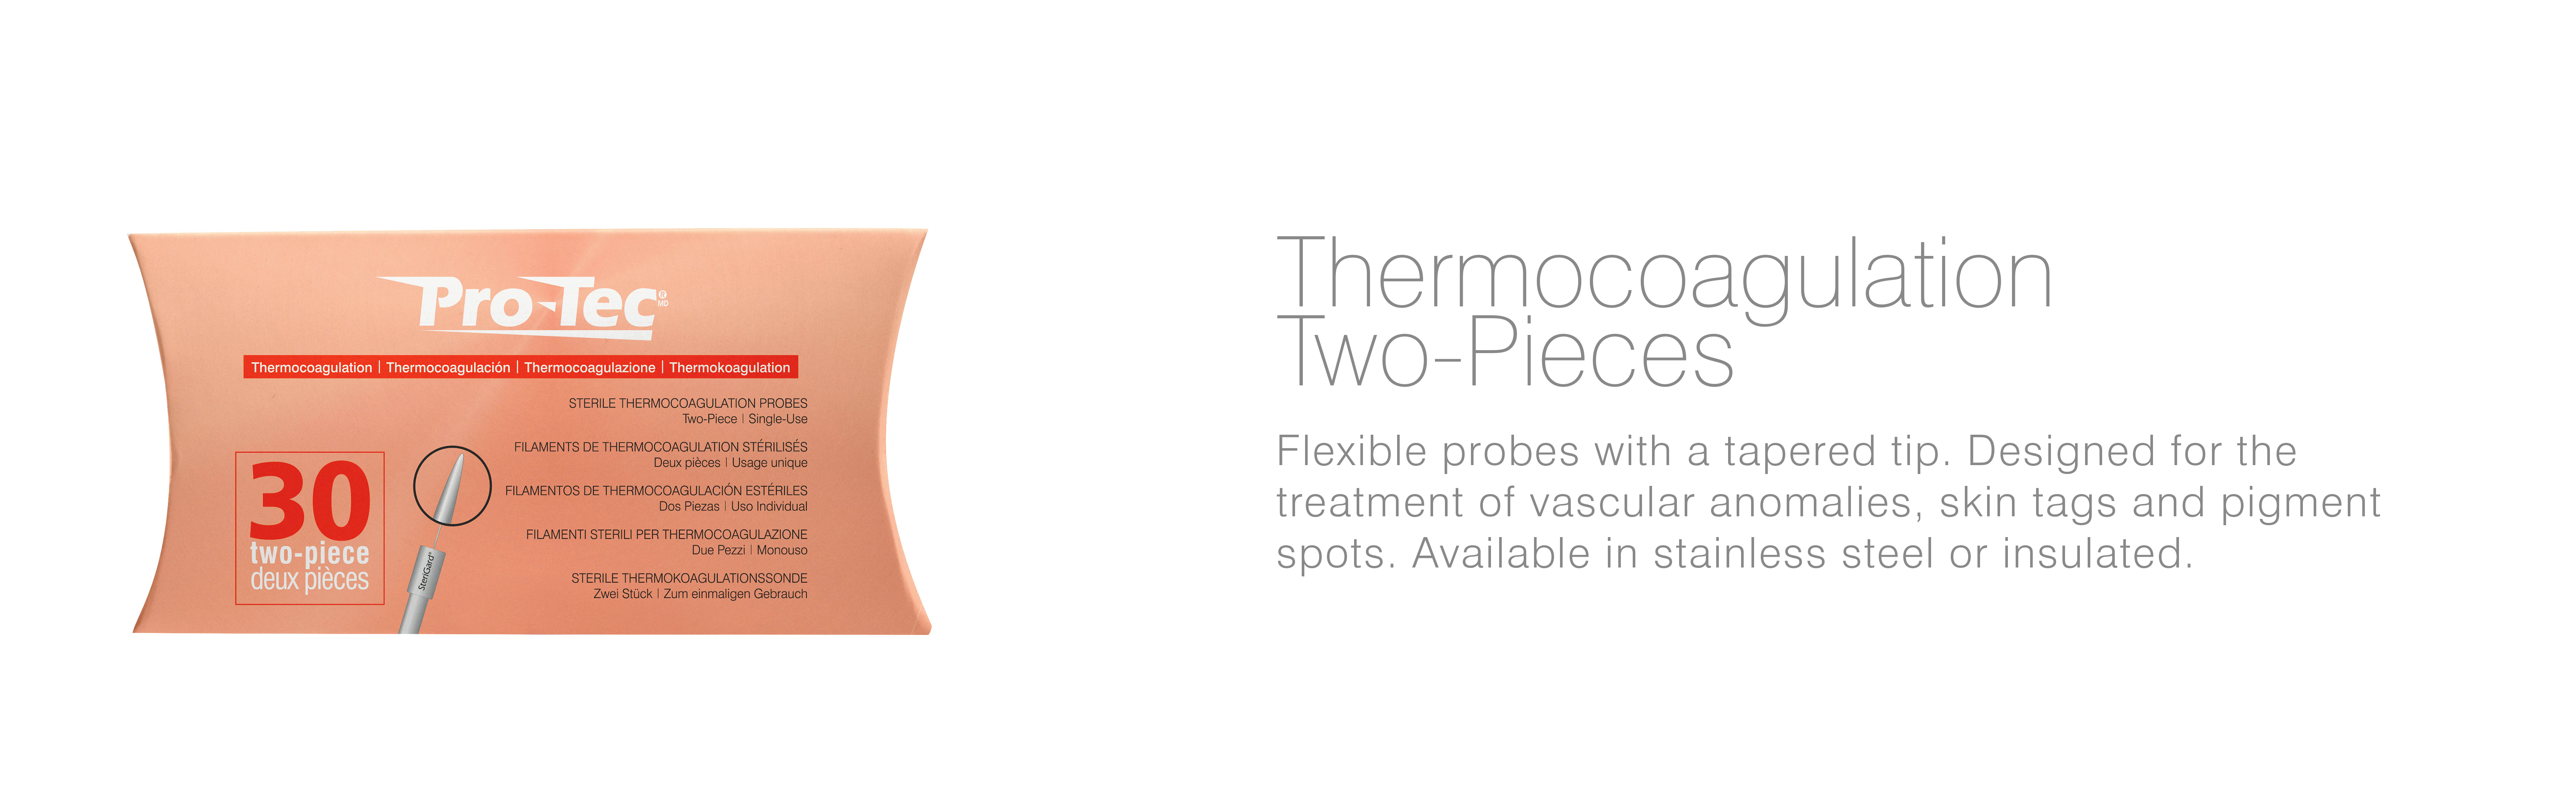 filament-protec_thermocoagulation-deuxpieces